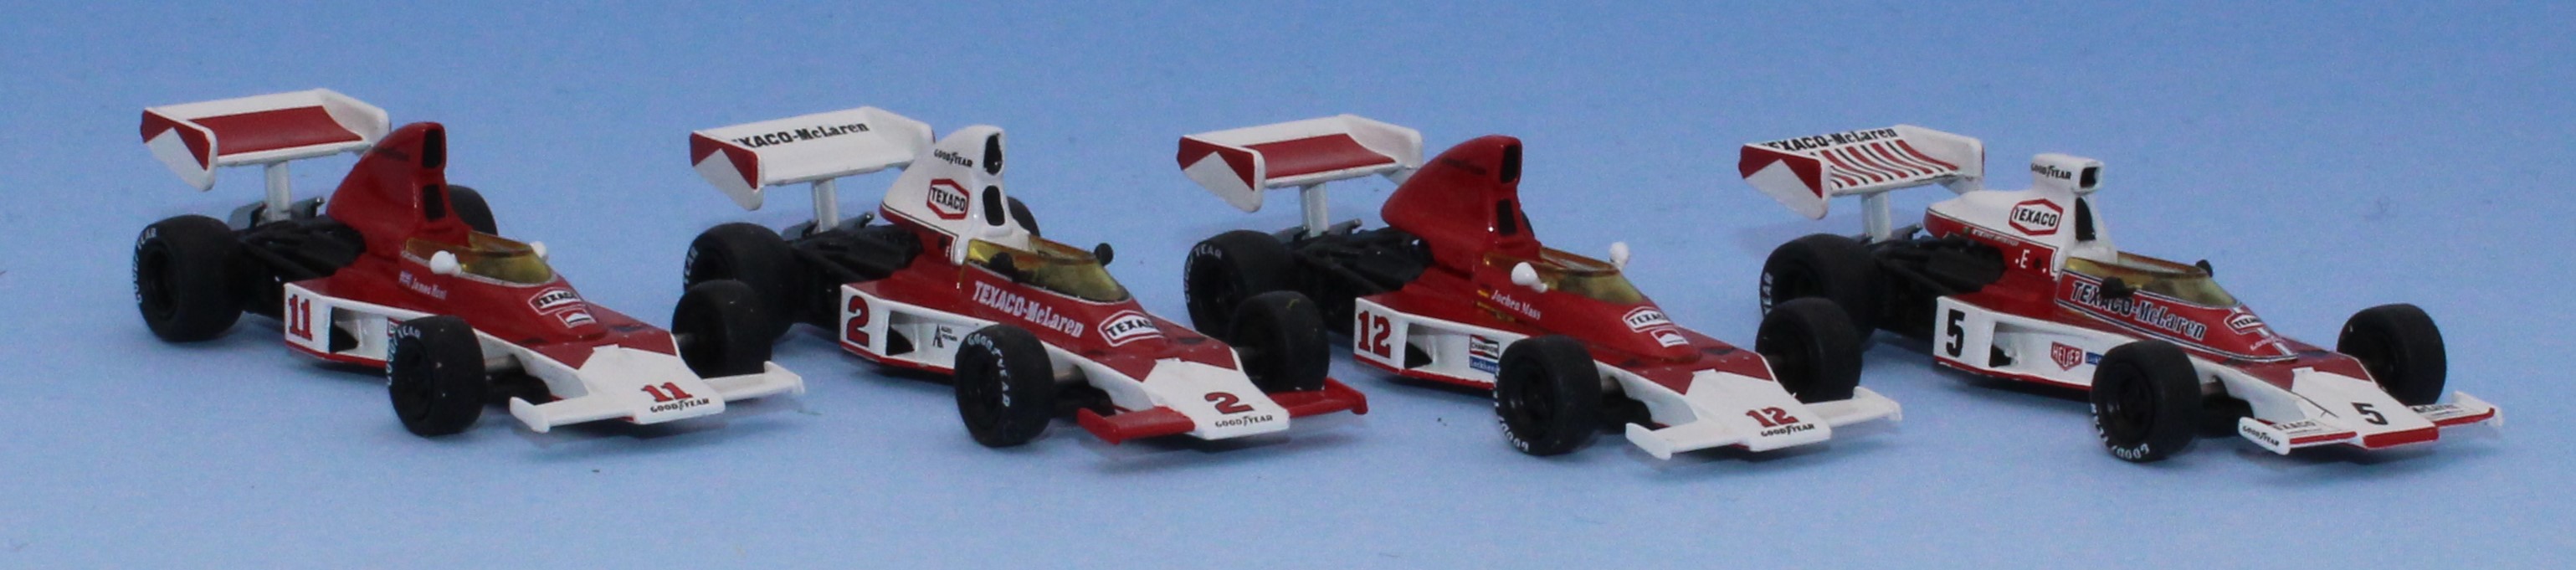 McLaren M23 Formule 1 (1973 - 1978)